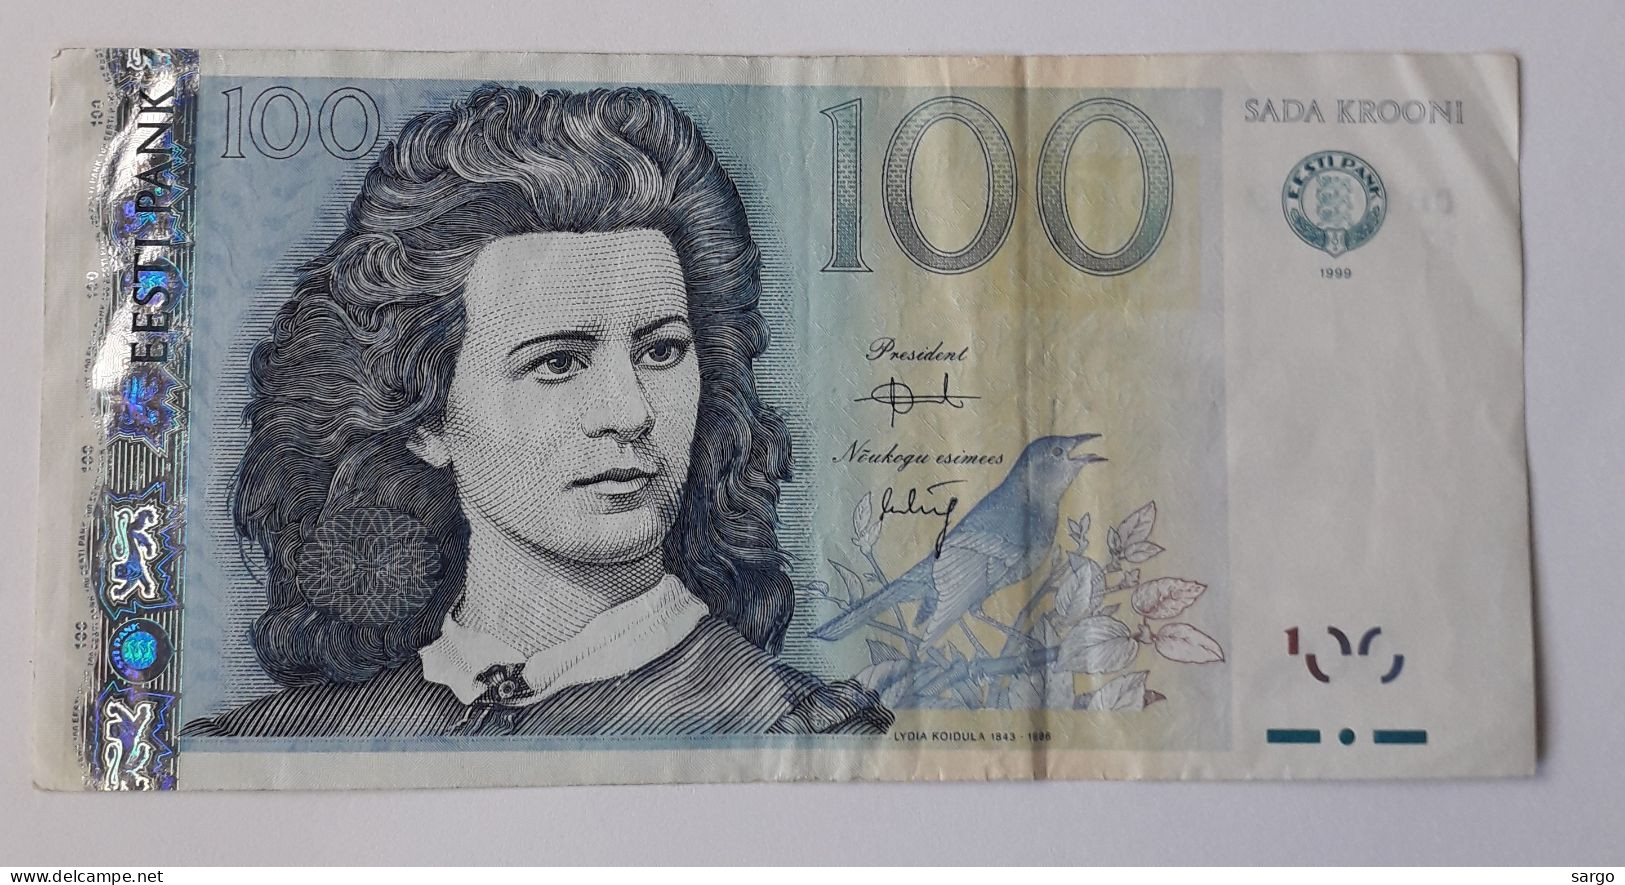 ESTONIA - 100 KROONI -  P 82 - 1999 -  CIRC - BANKNOTES - PAPER MONEY - CARTAMONETA - - Estonia